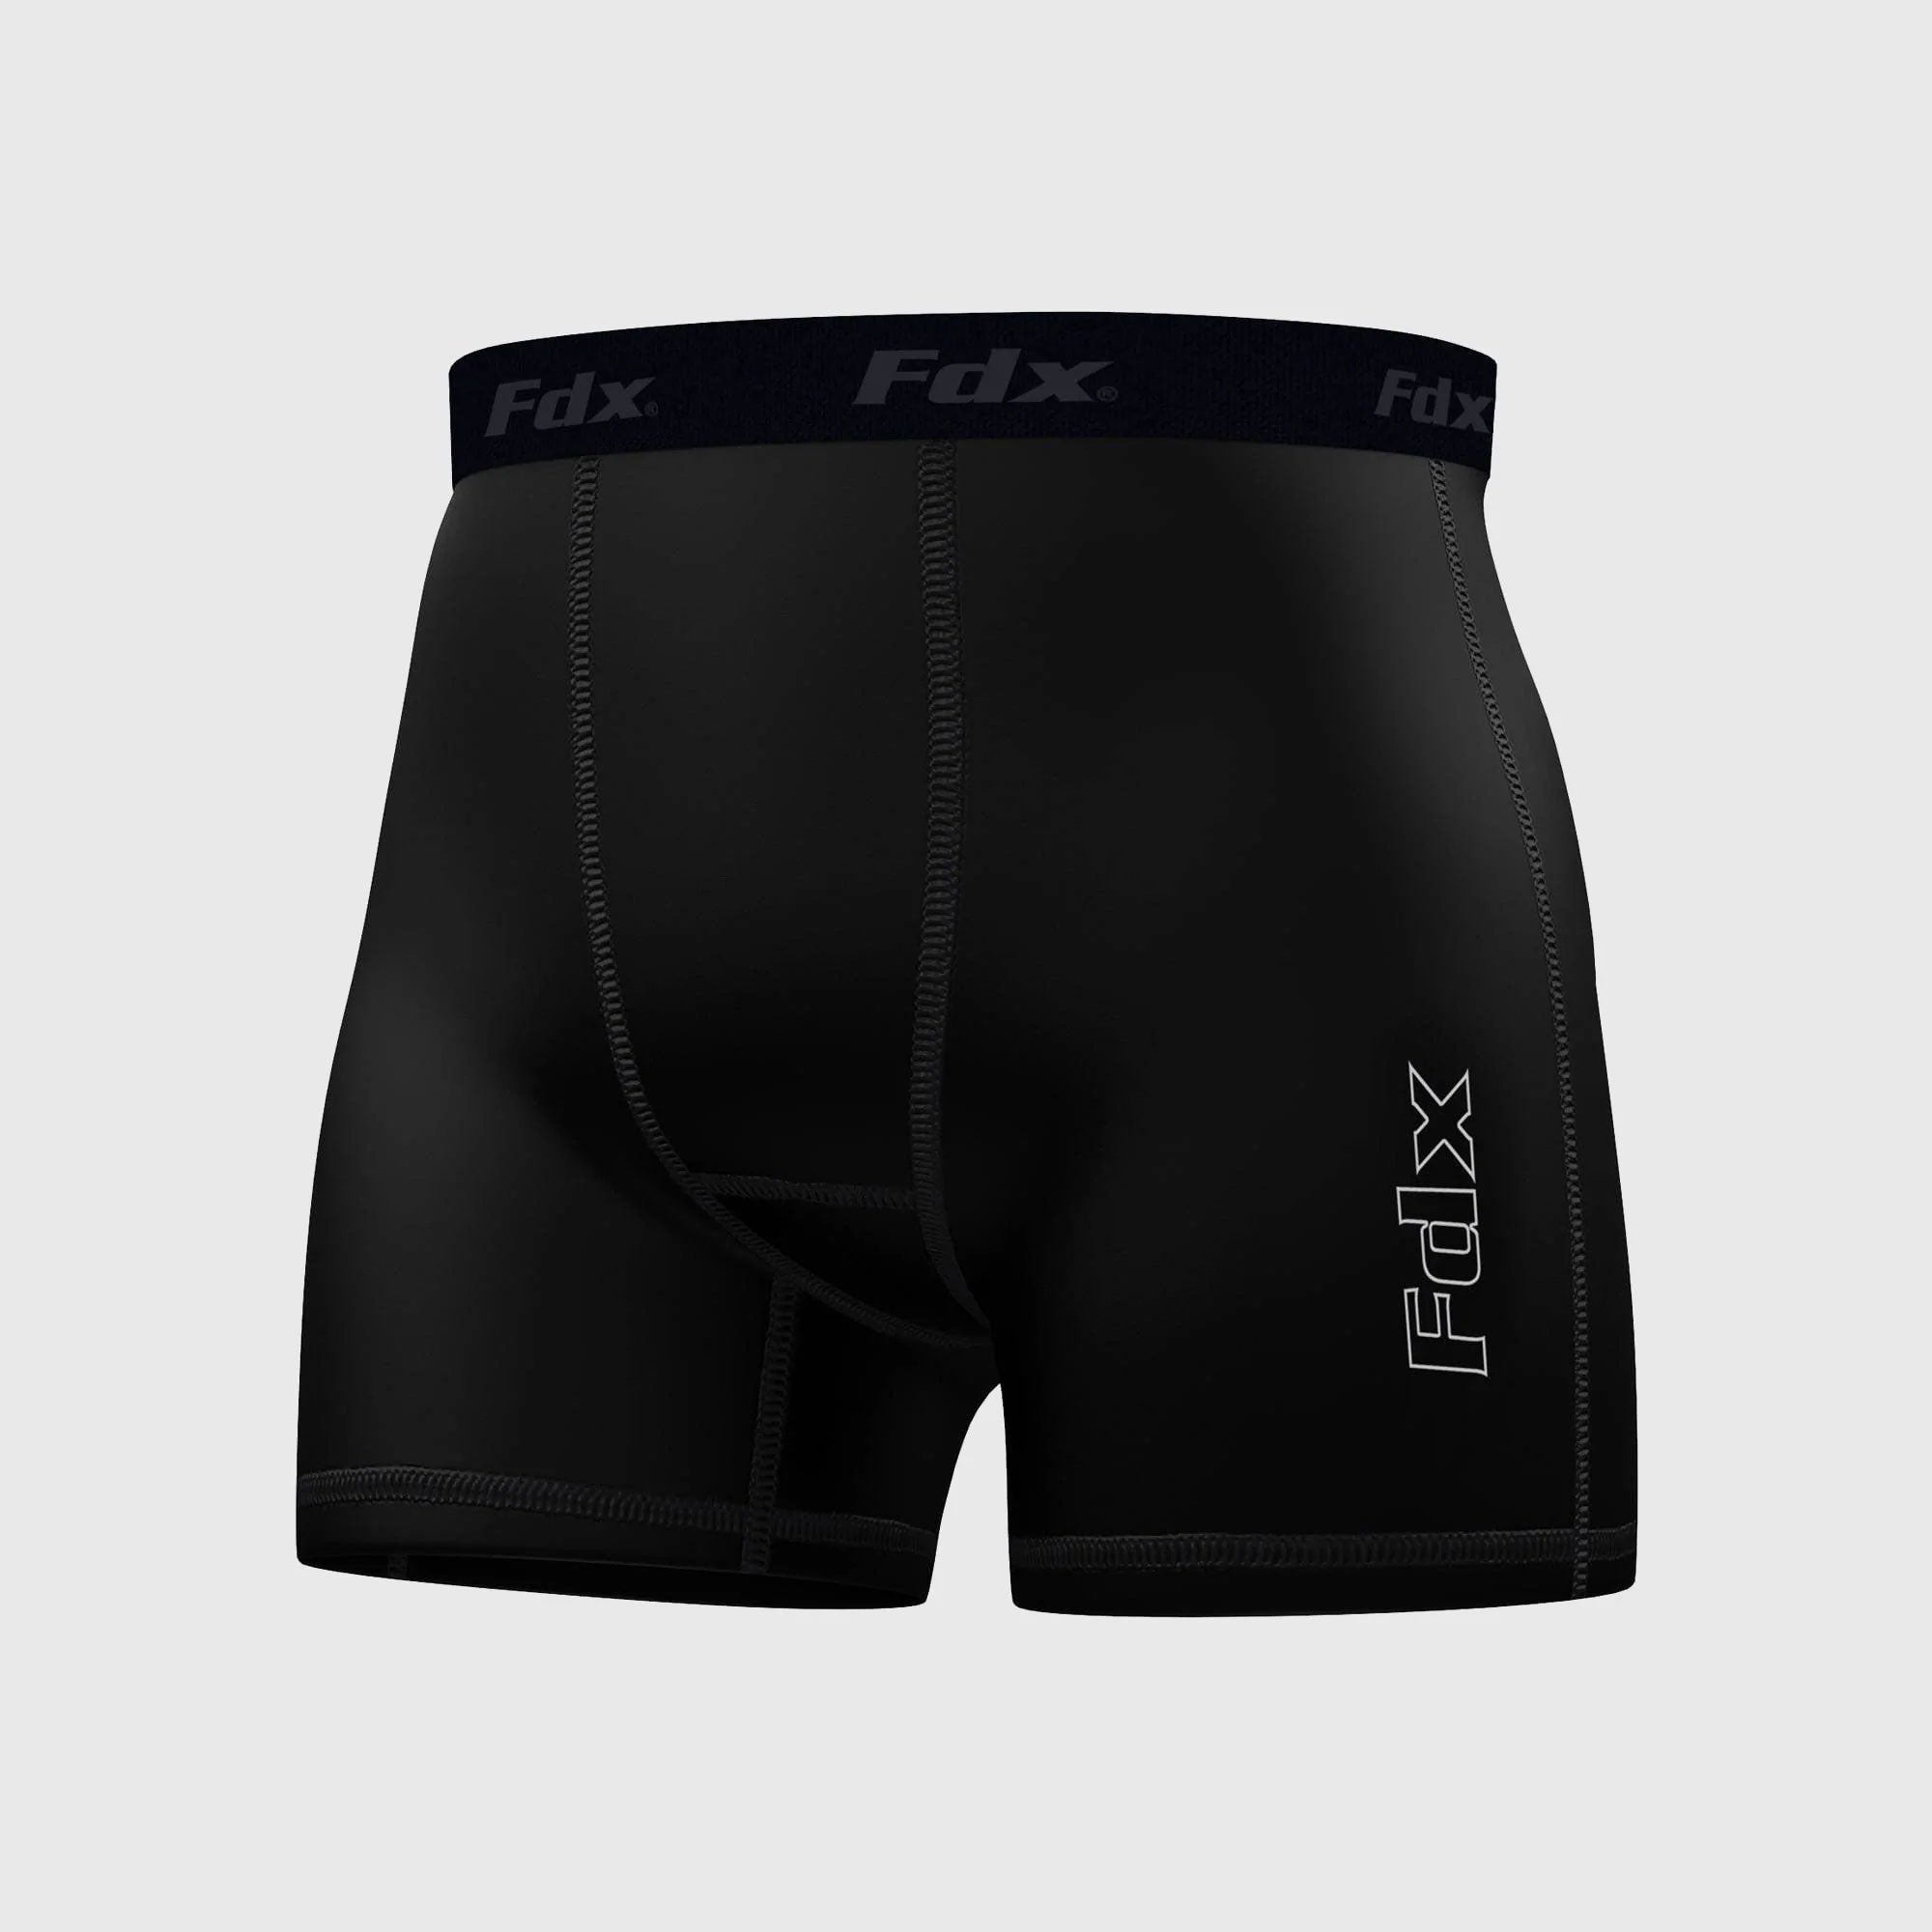 Fdx Men's Black Compression Boxer Shorts Gym Workout Running Athletic Yoga Elastic Waistband Stretchable Breathable